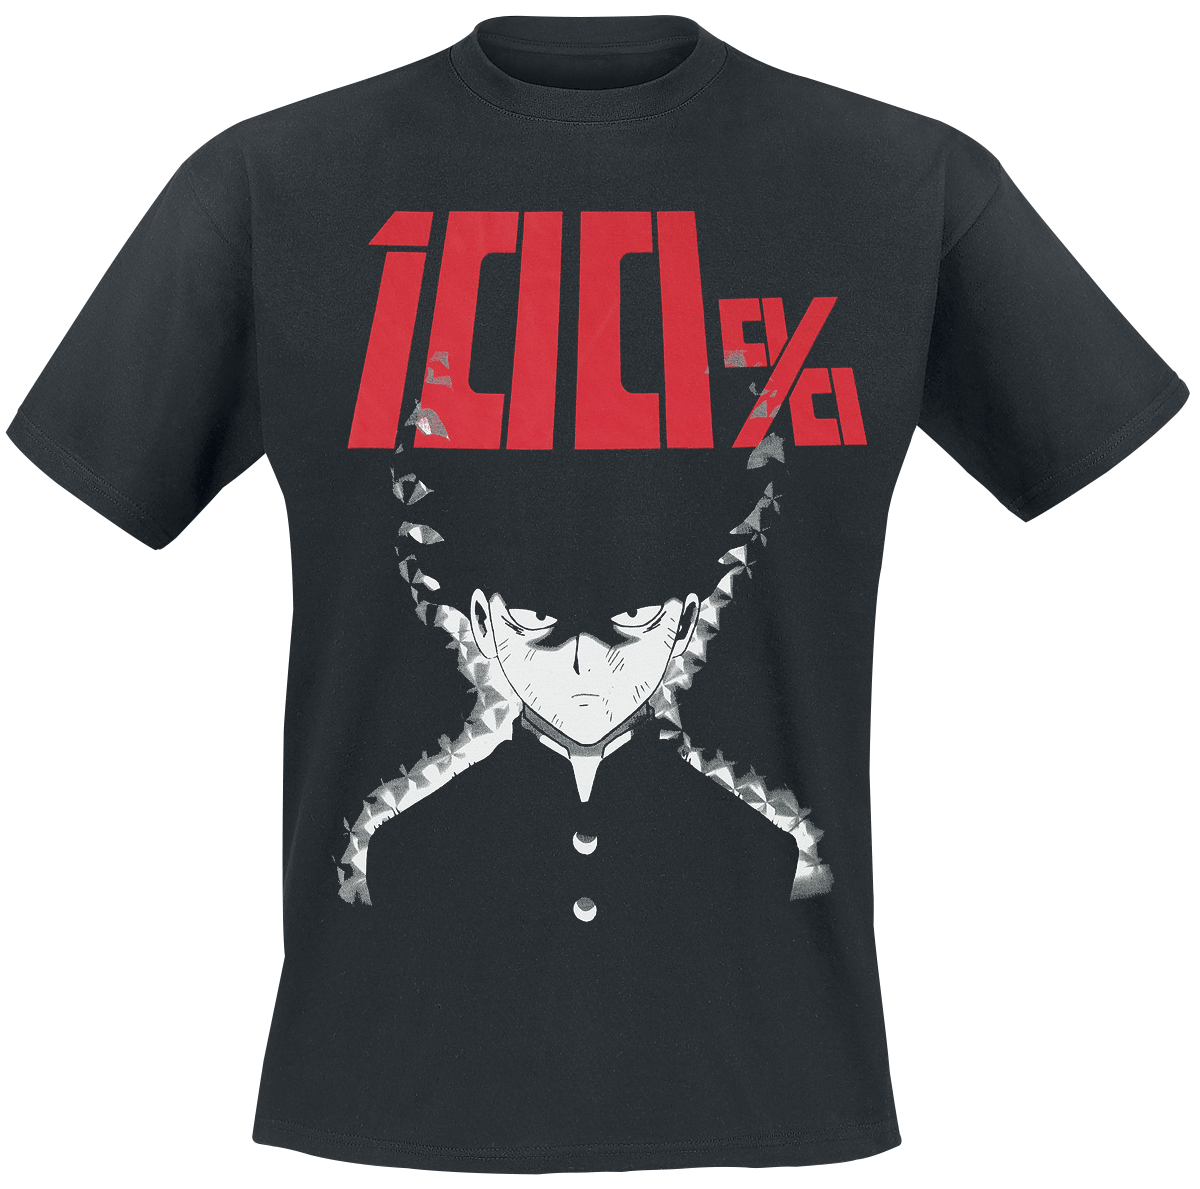 Mob Psycho 100 - 100% - T-Shirt - black image